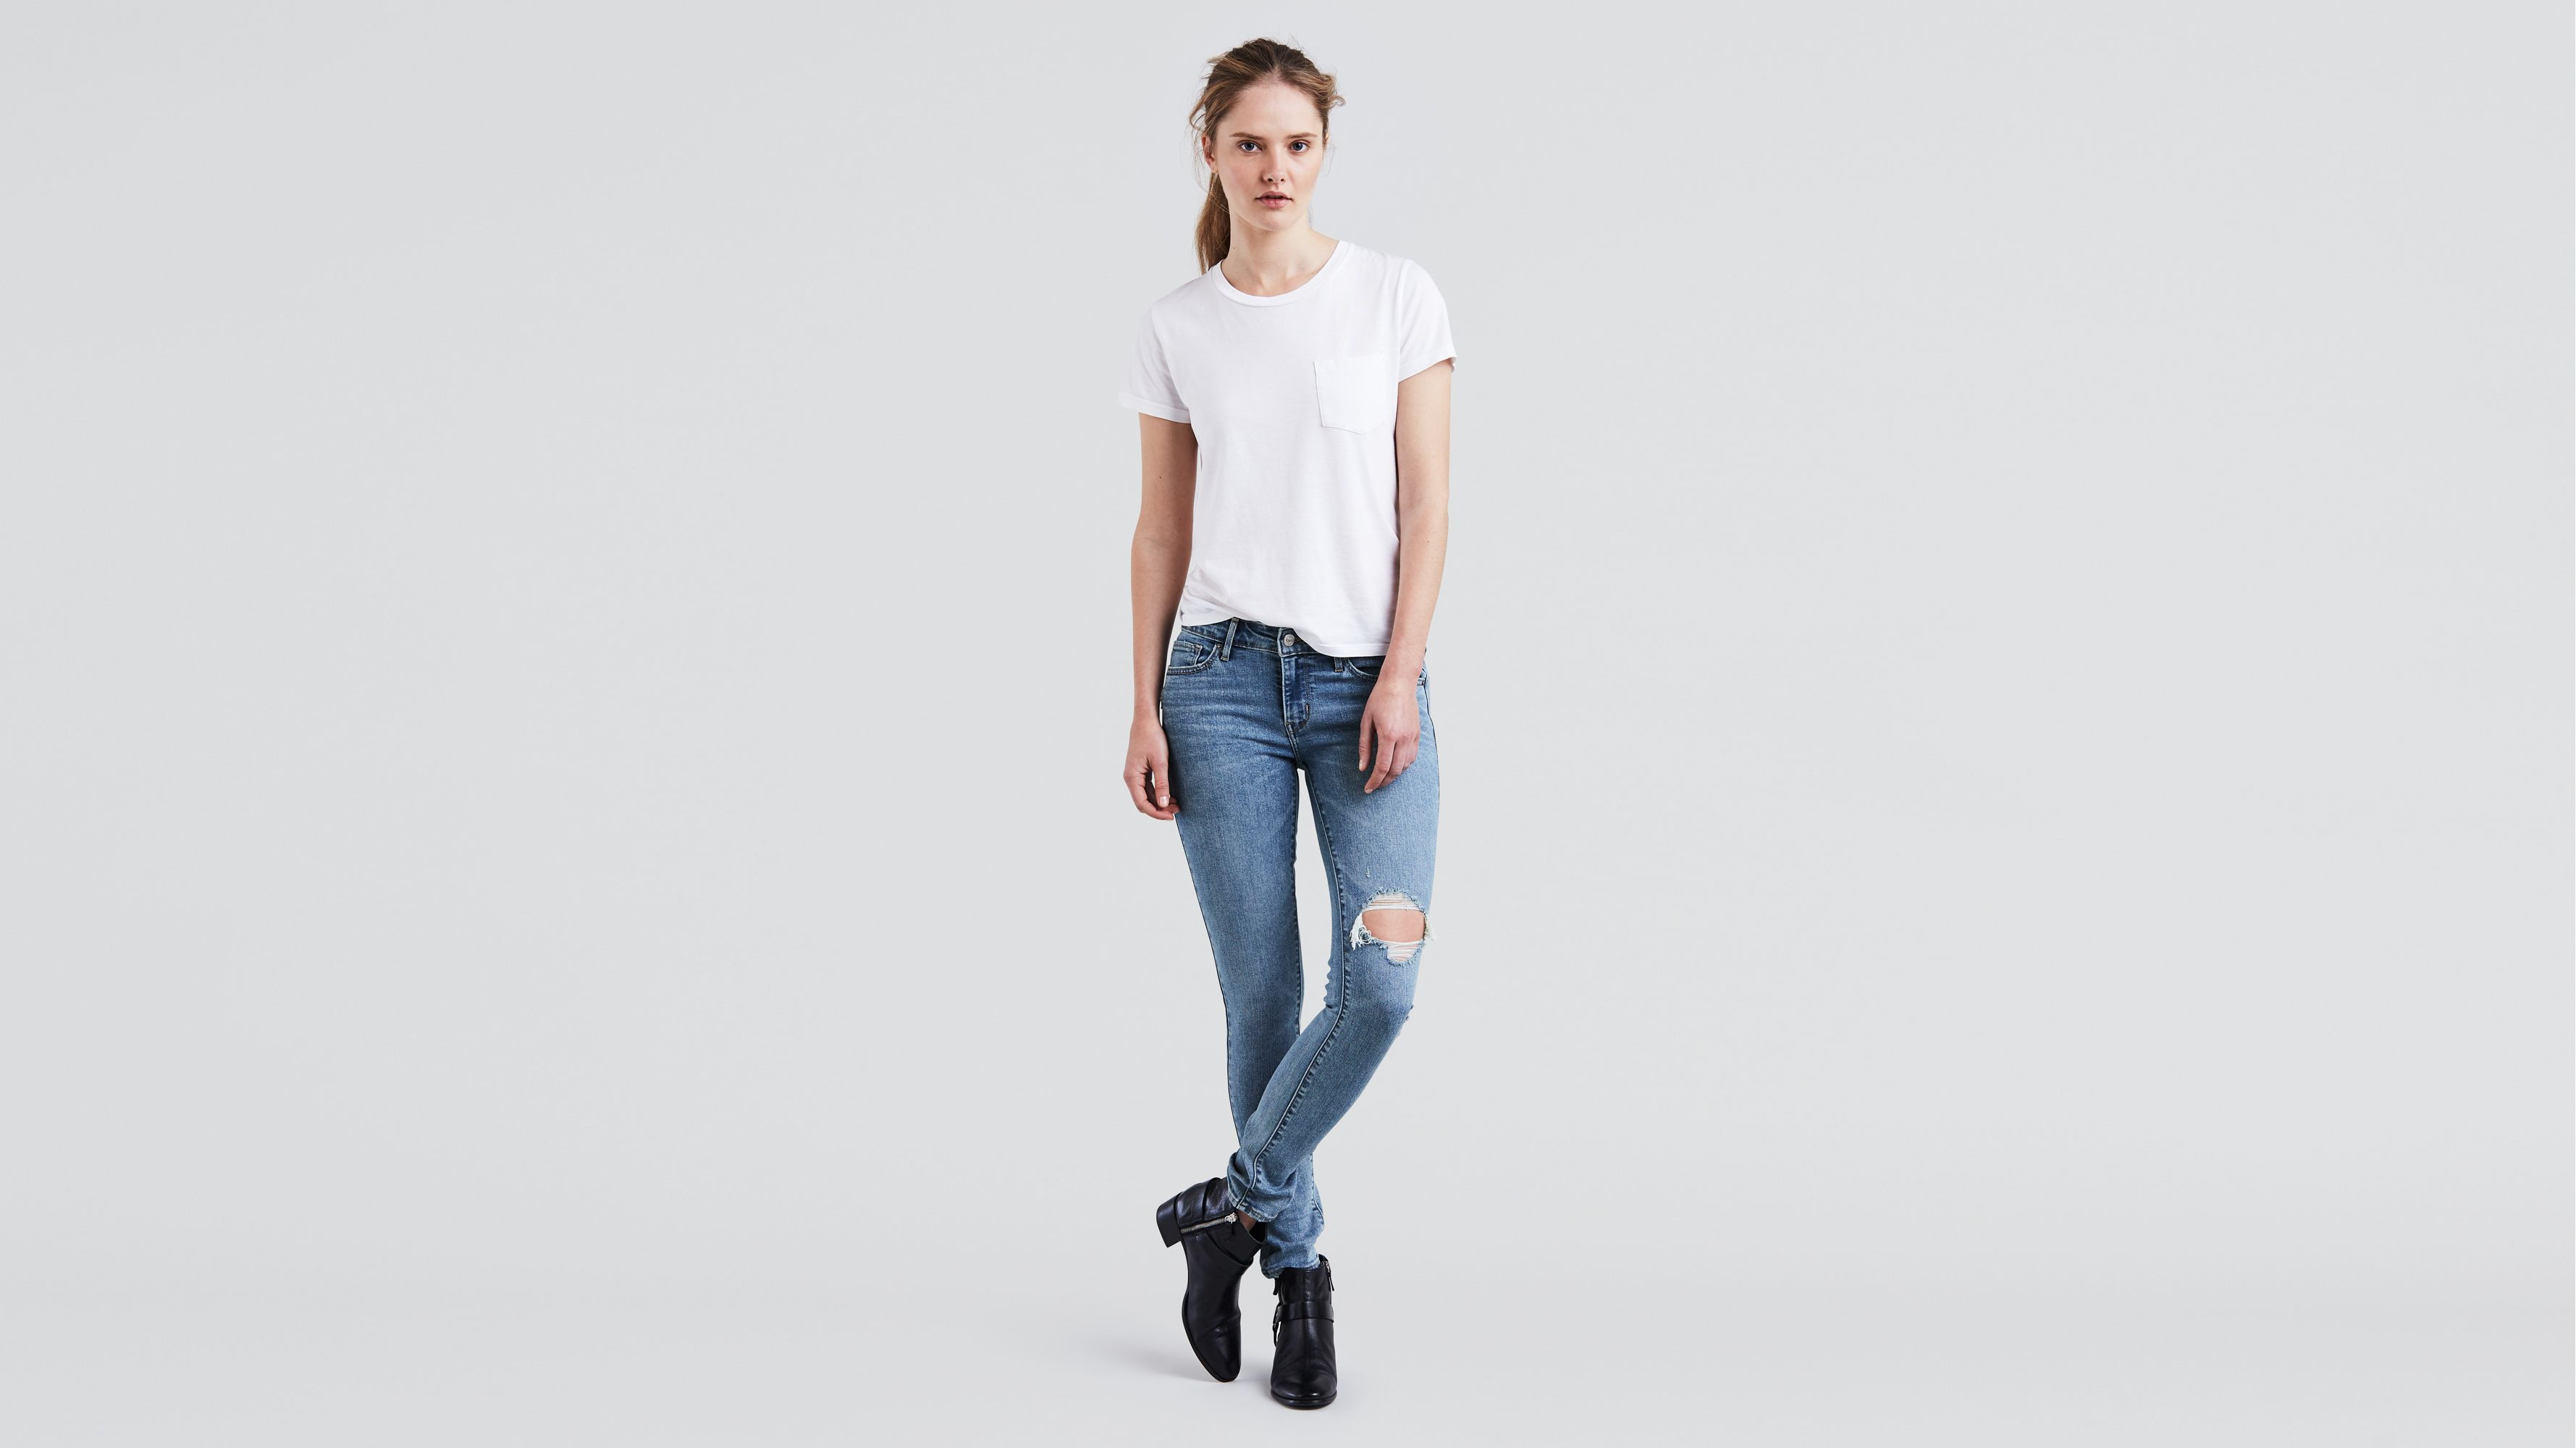 womens levis 711 skinny jeans